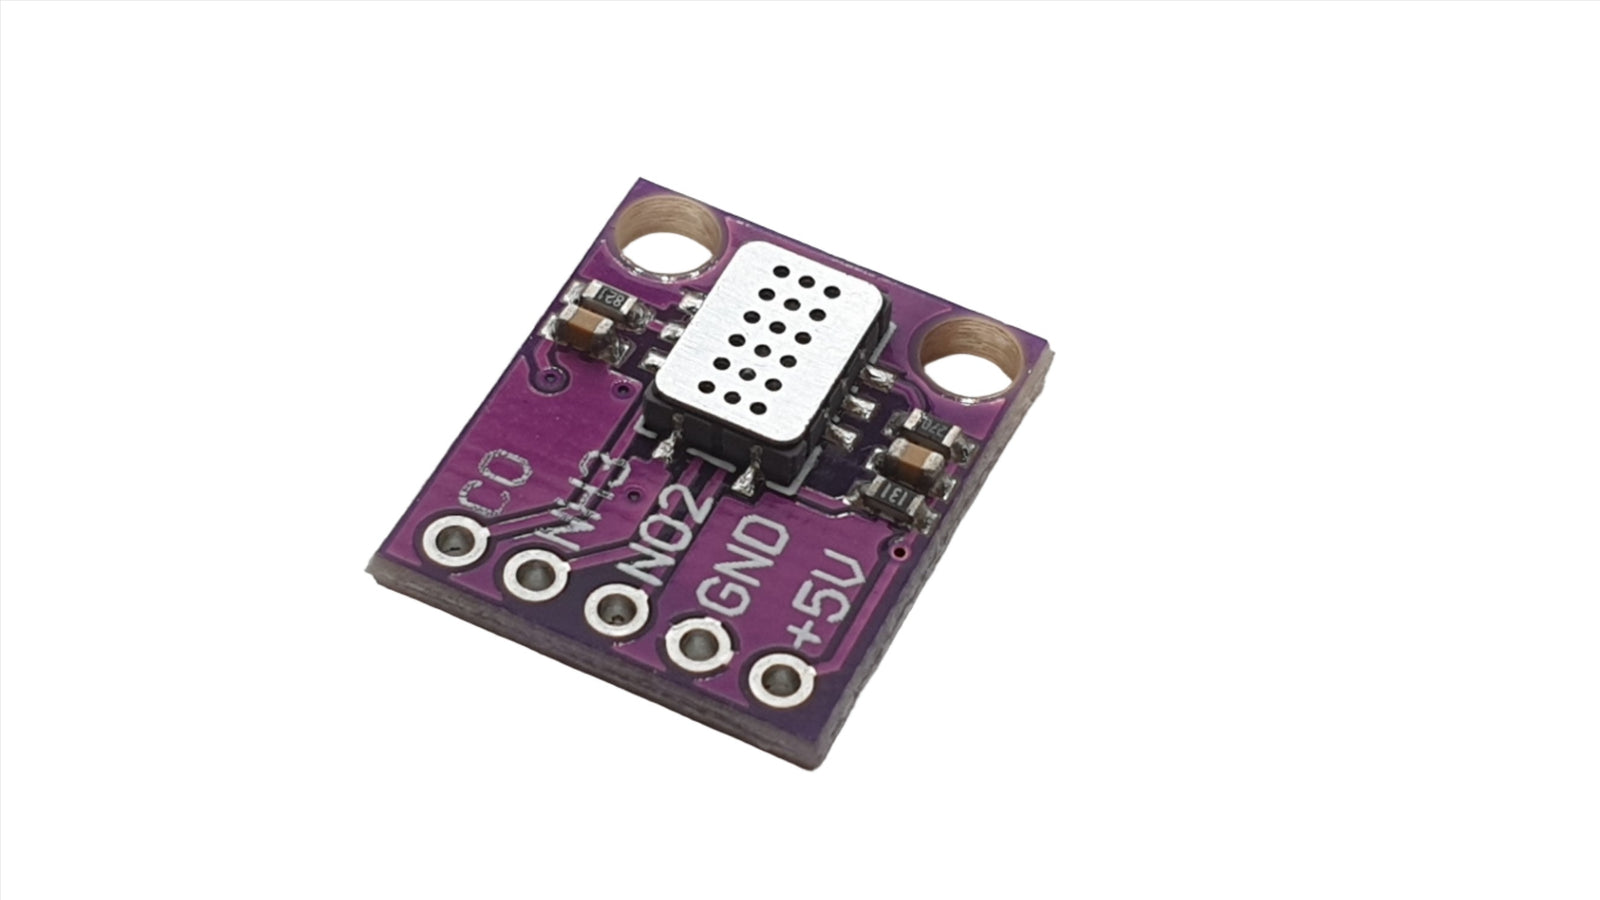 MiCS-4514 based pollution sensor